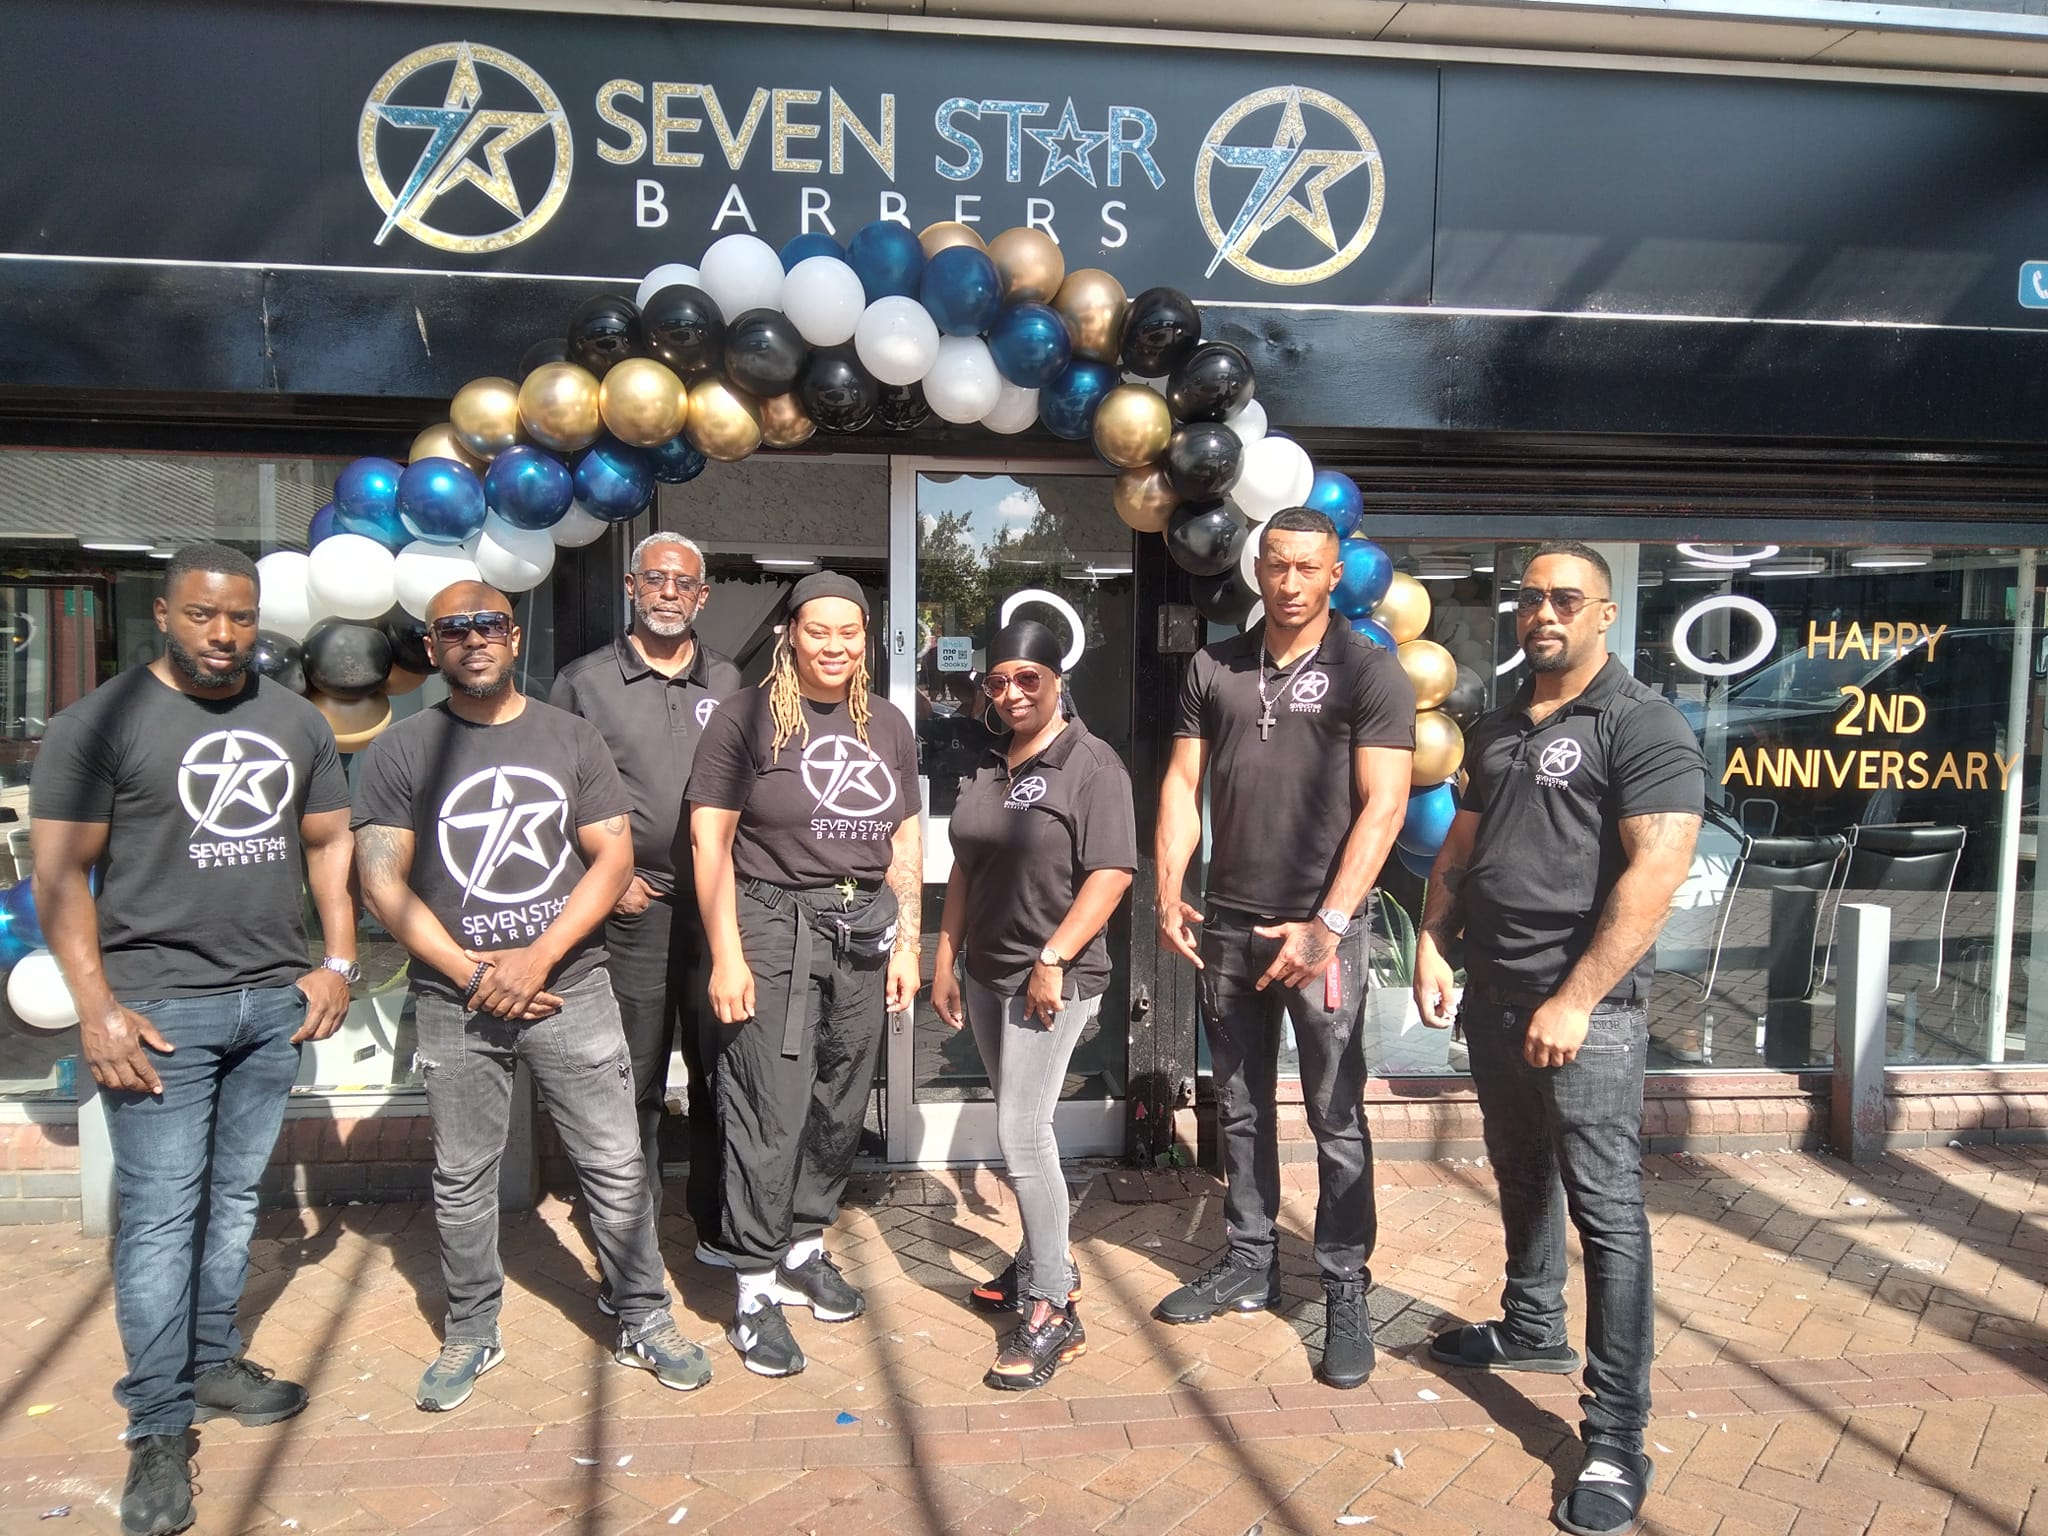 Happy 2nd Anniversary Seven Star Barbers